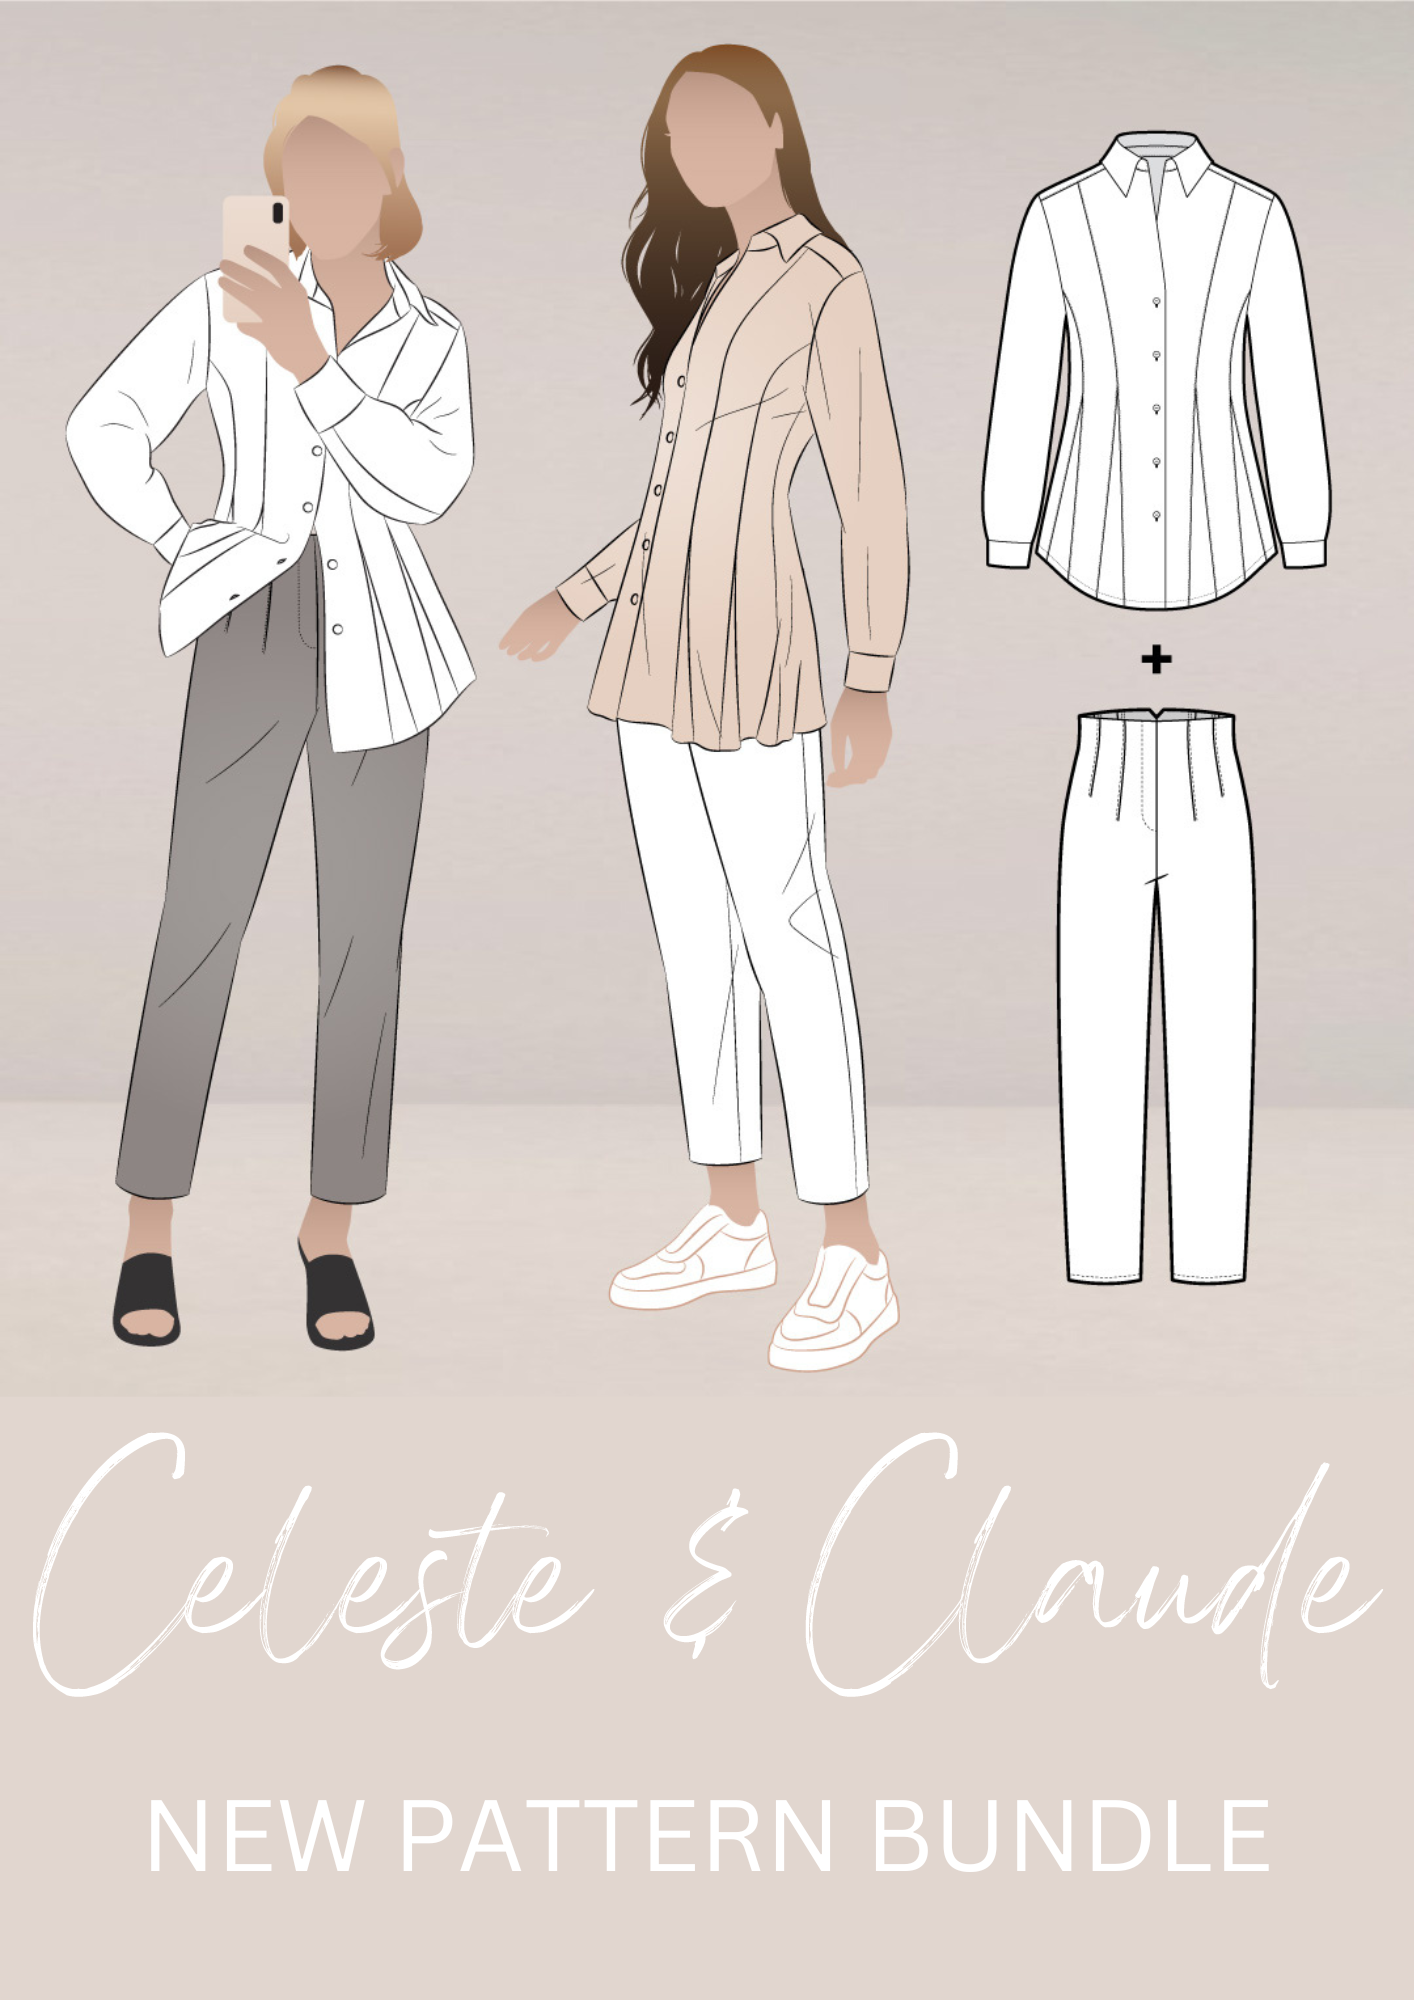 New pattern bundle - Celeste and Claude